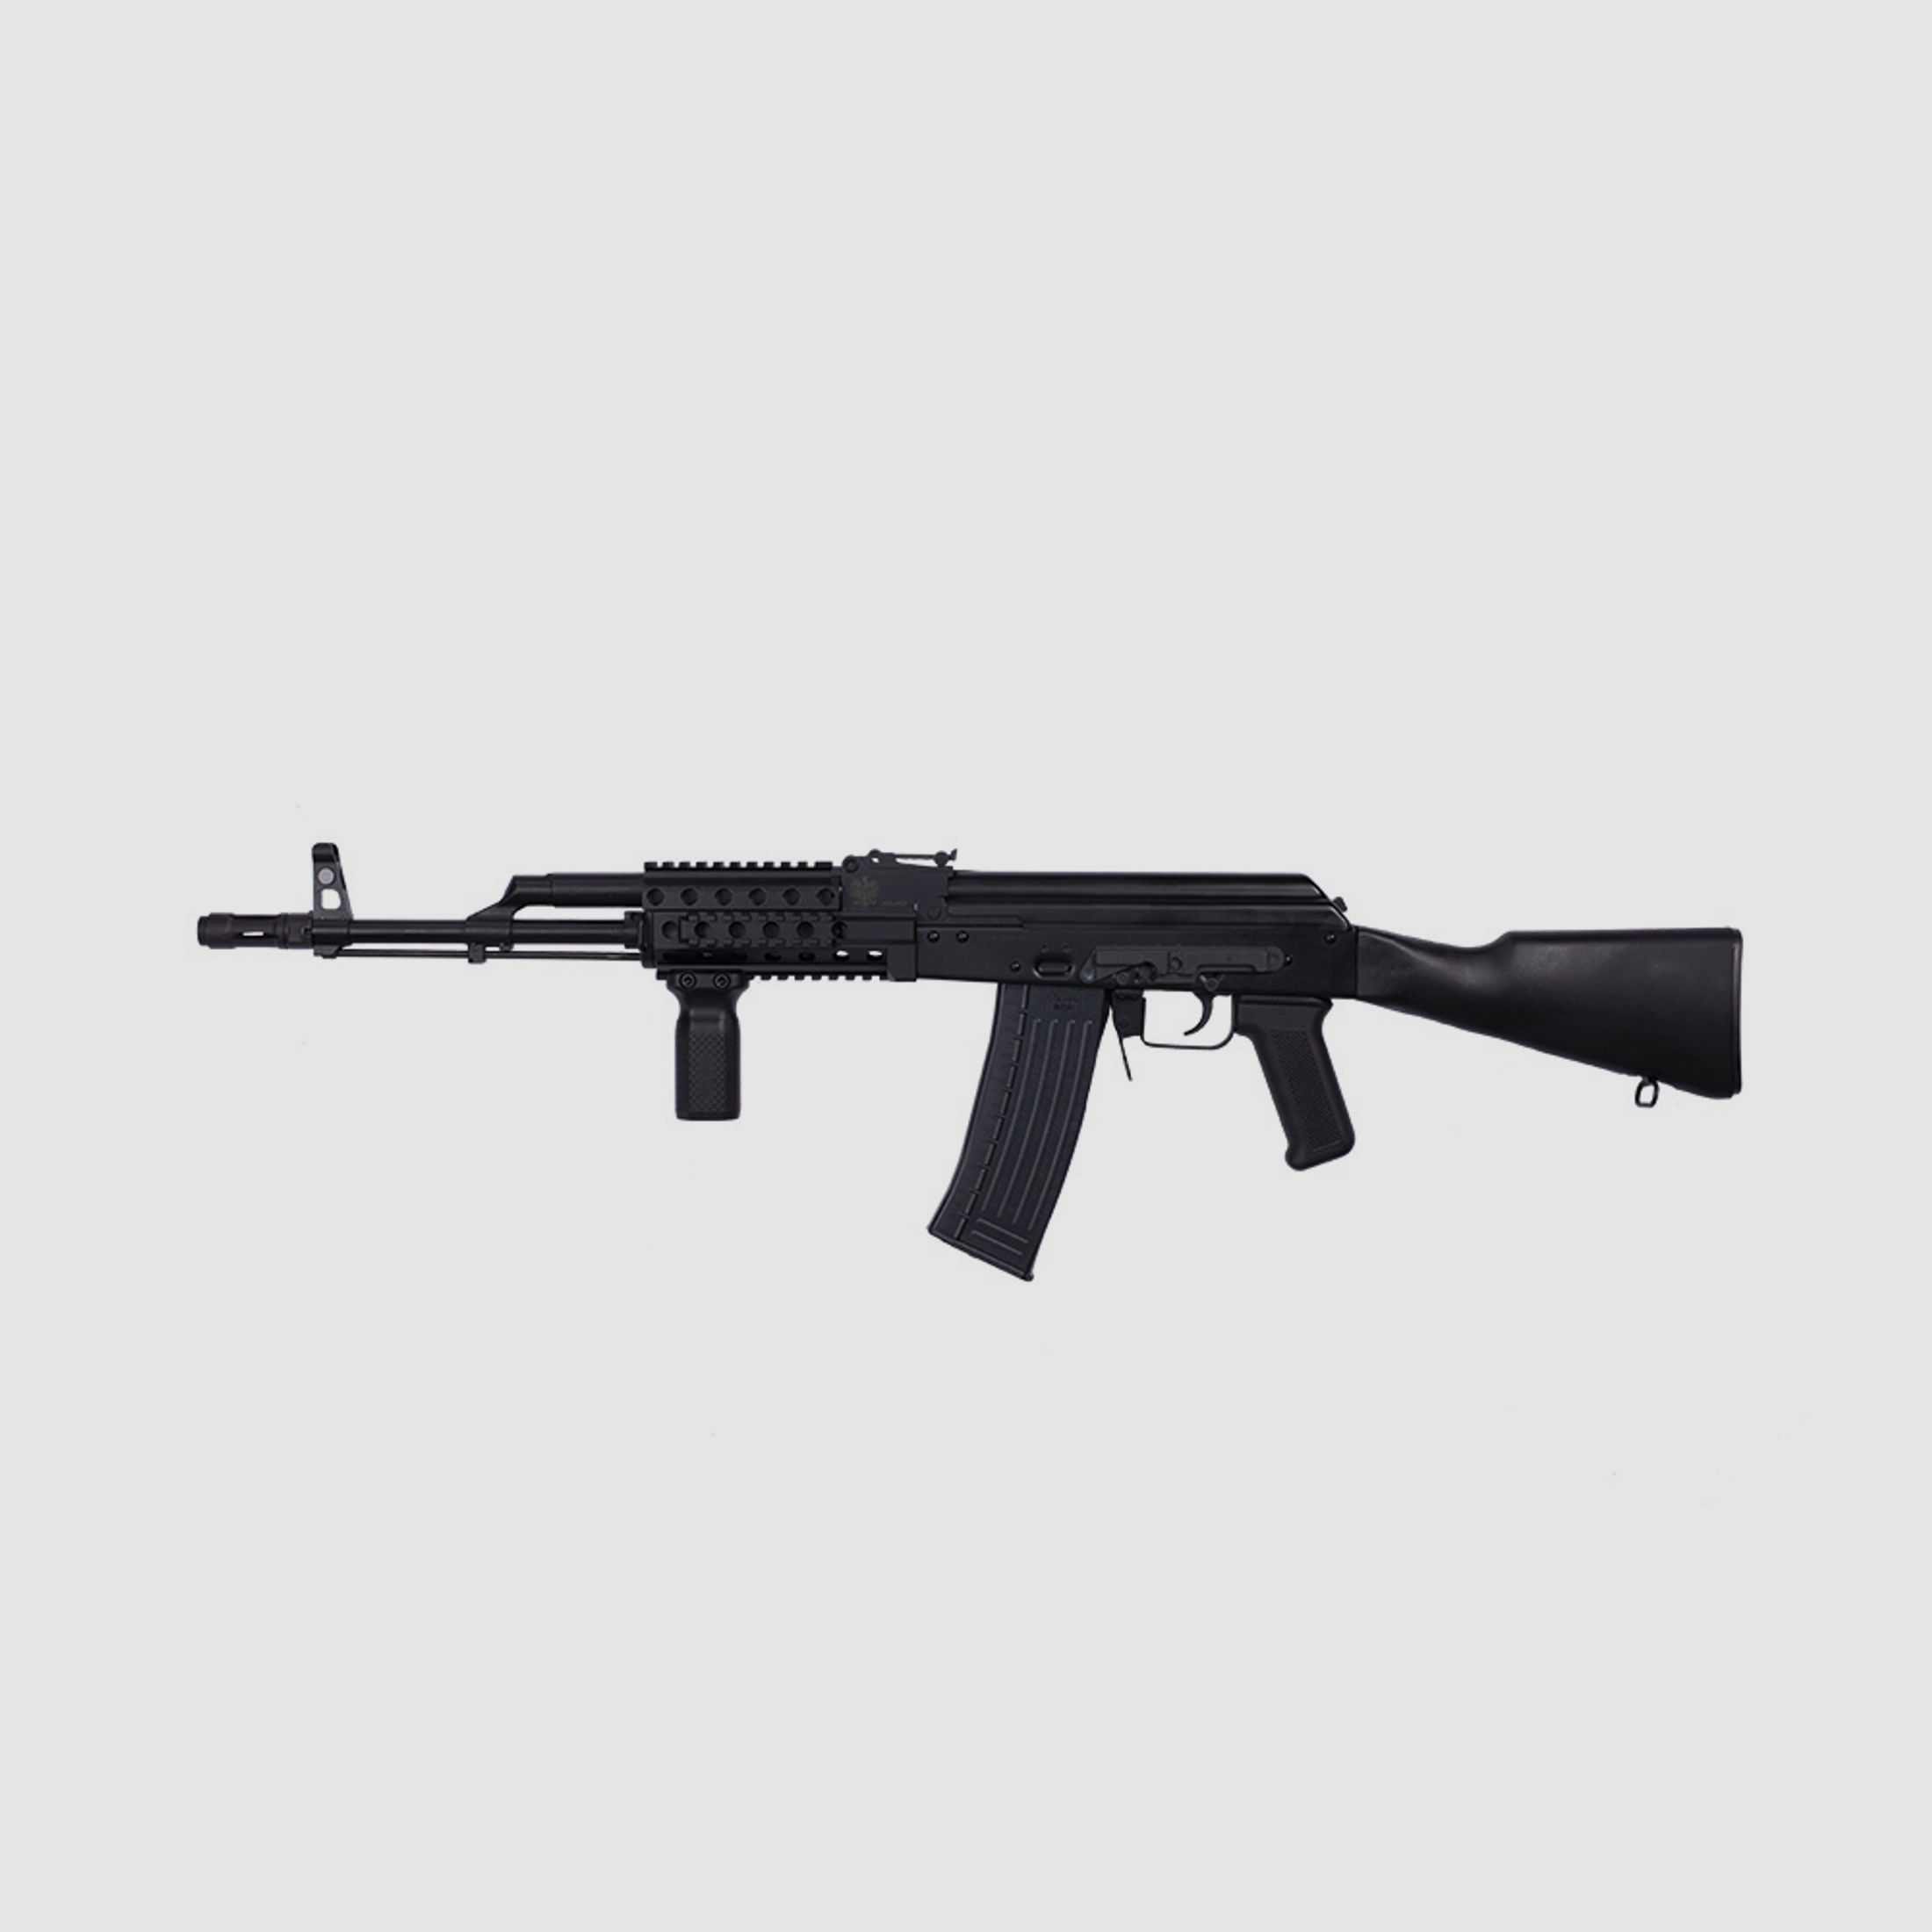 WBP Jack Tactical AK 47 System Kaliber .223 REM Kalaschnikov Sportlich zugelassen